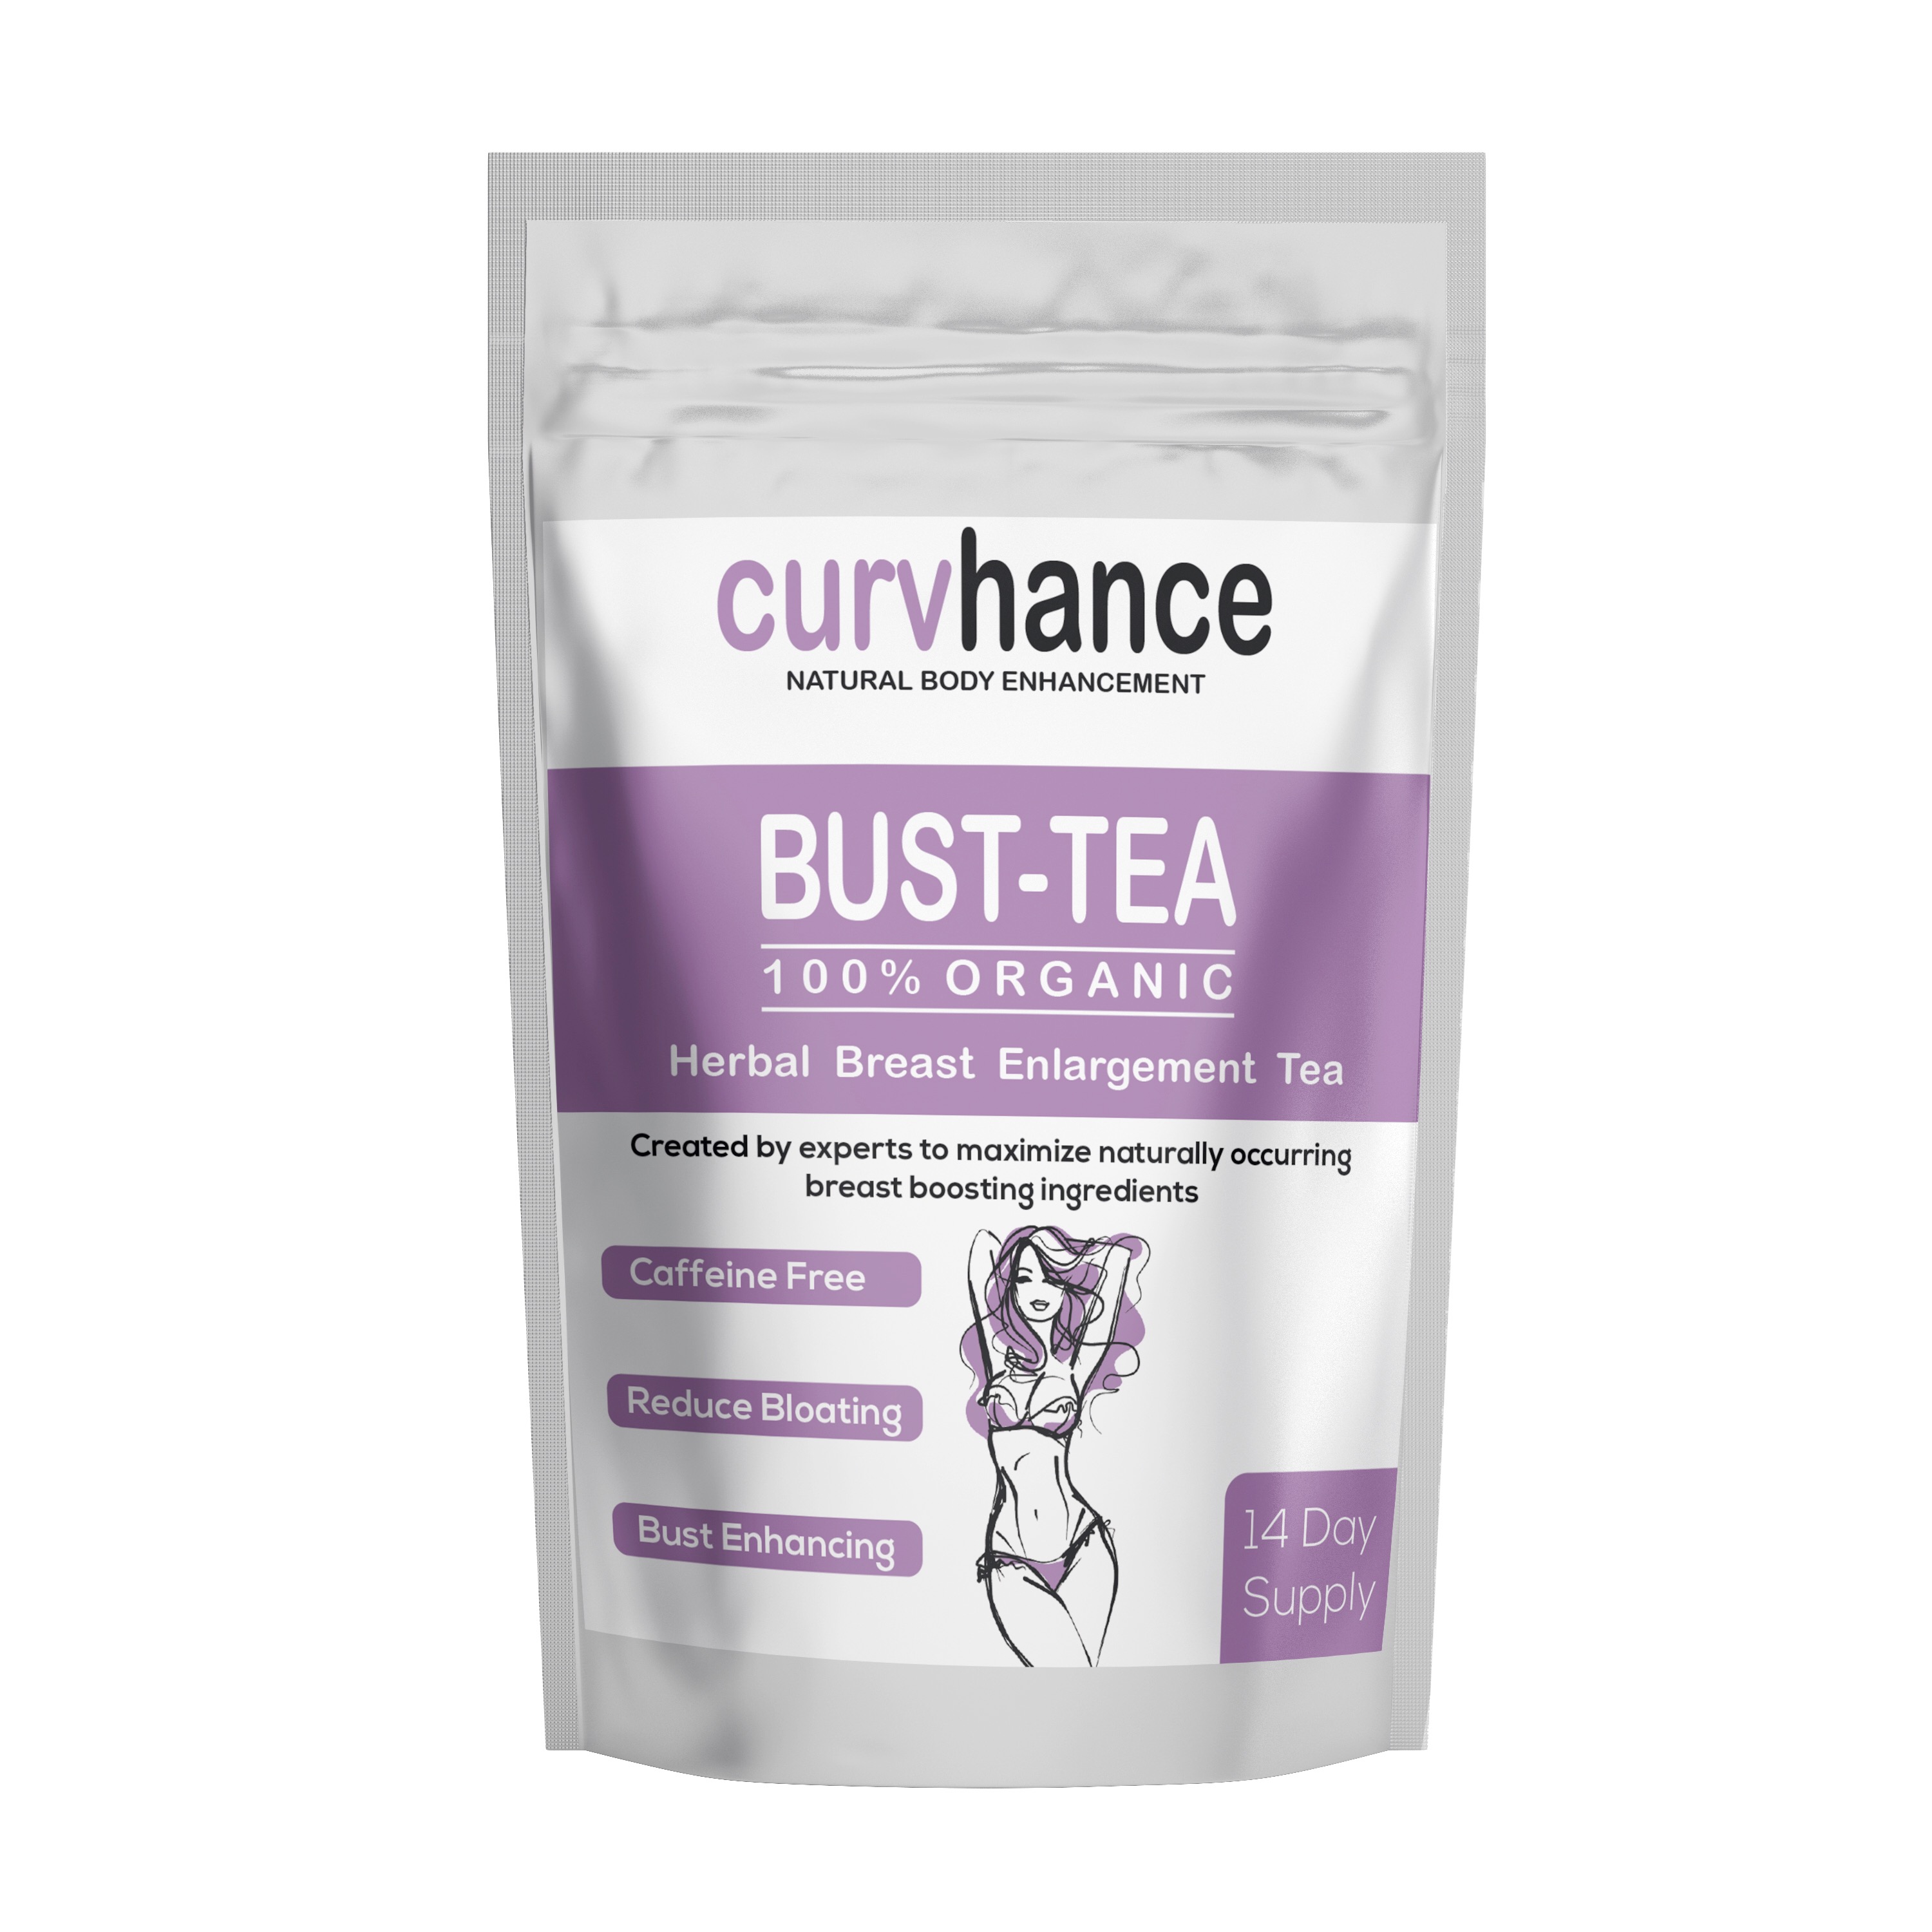 Shop curvhance Bust-Tea online in USA at curvhance.com. 